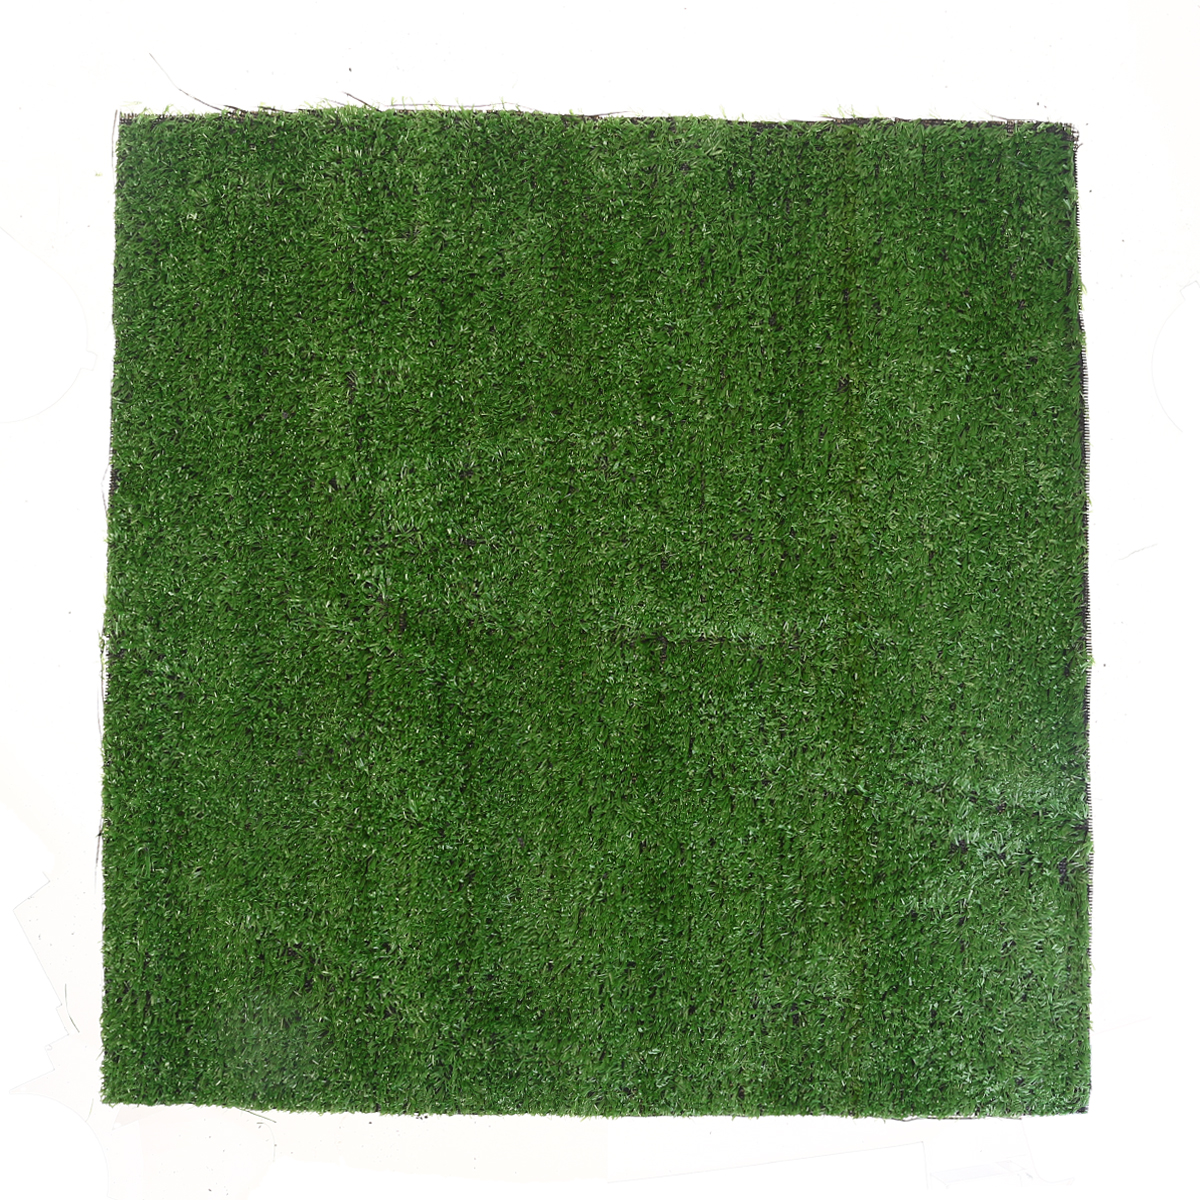 05x05m-Artificial-Simulation-Carpet-Floor-Mat-Green-Artificial-Lawn-1702506-6